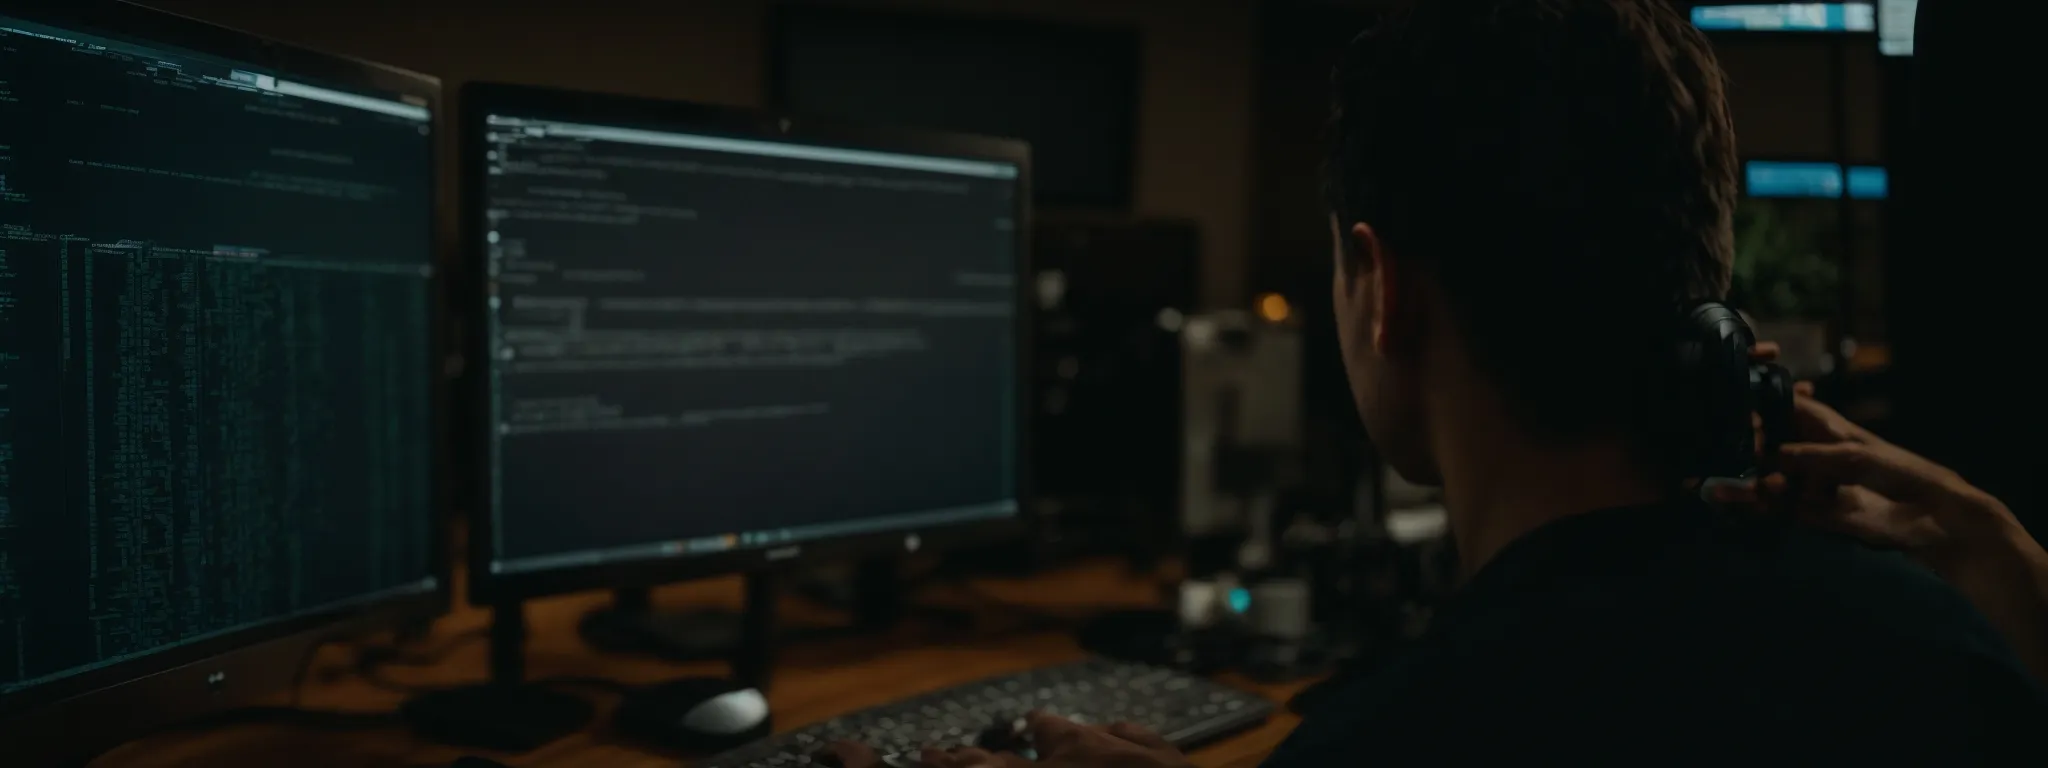 a web developer scrutinizes code on a computer screen while optimizing a website.